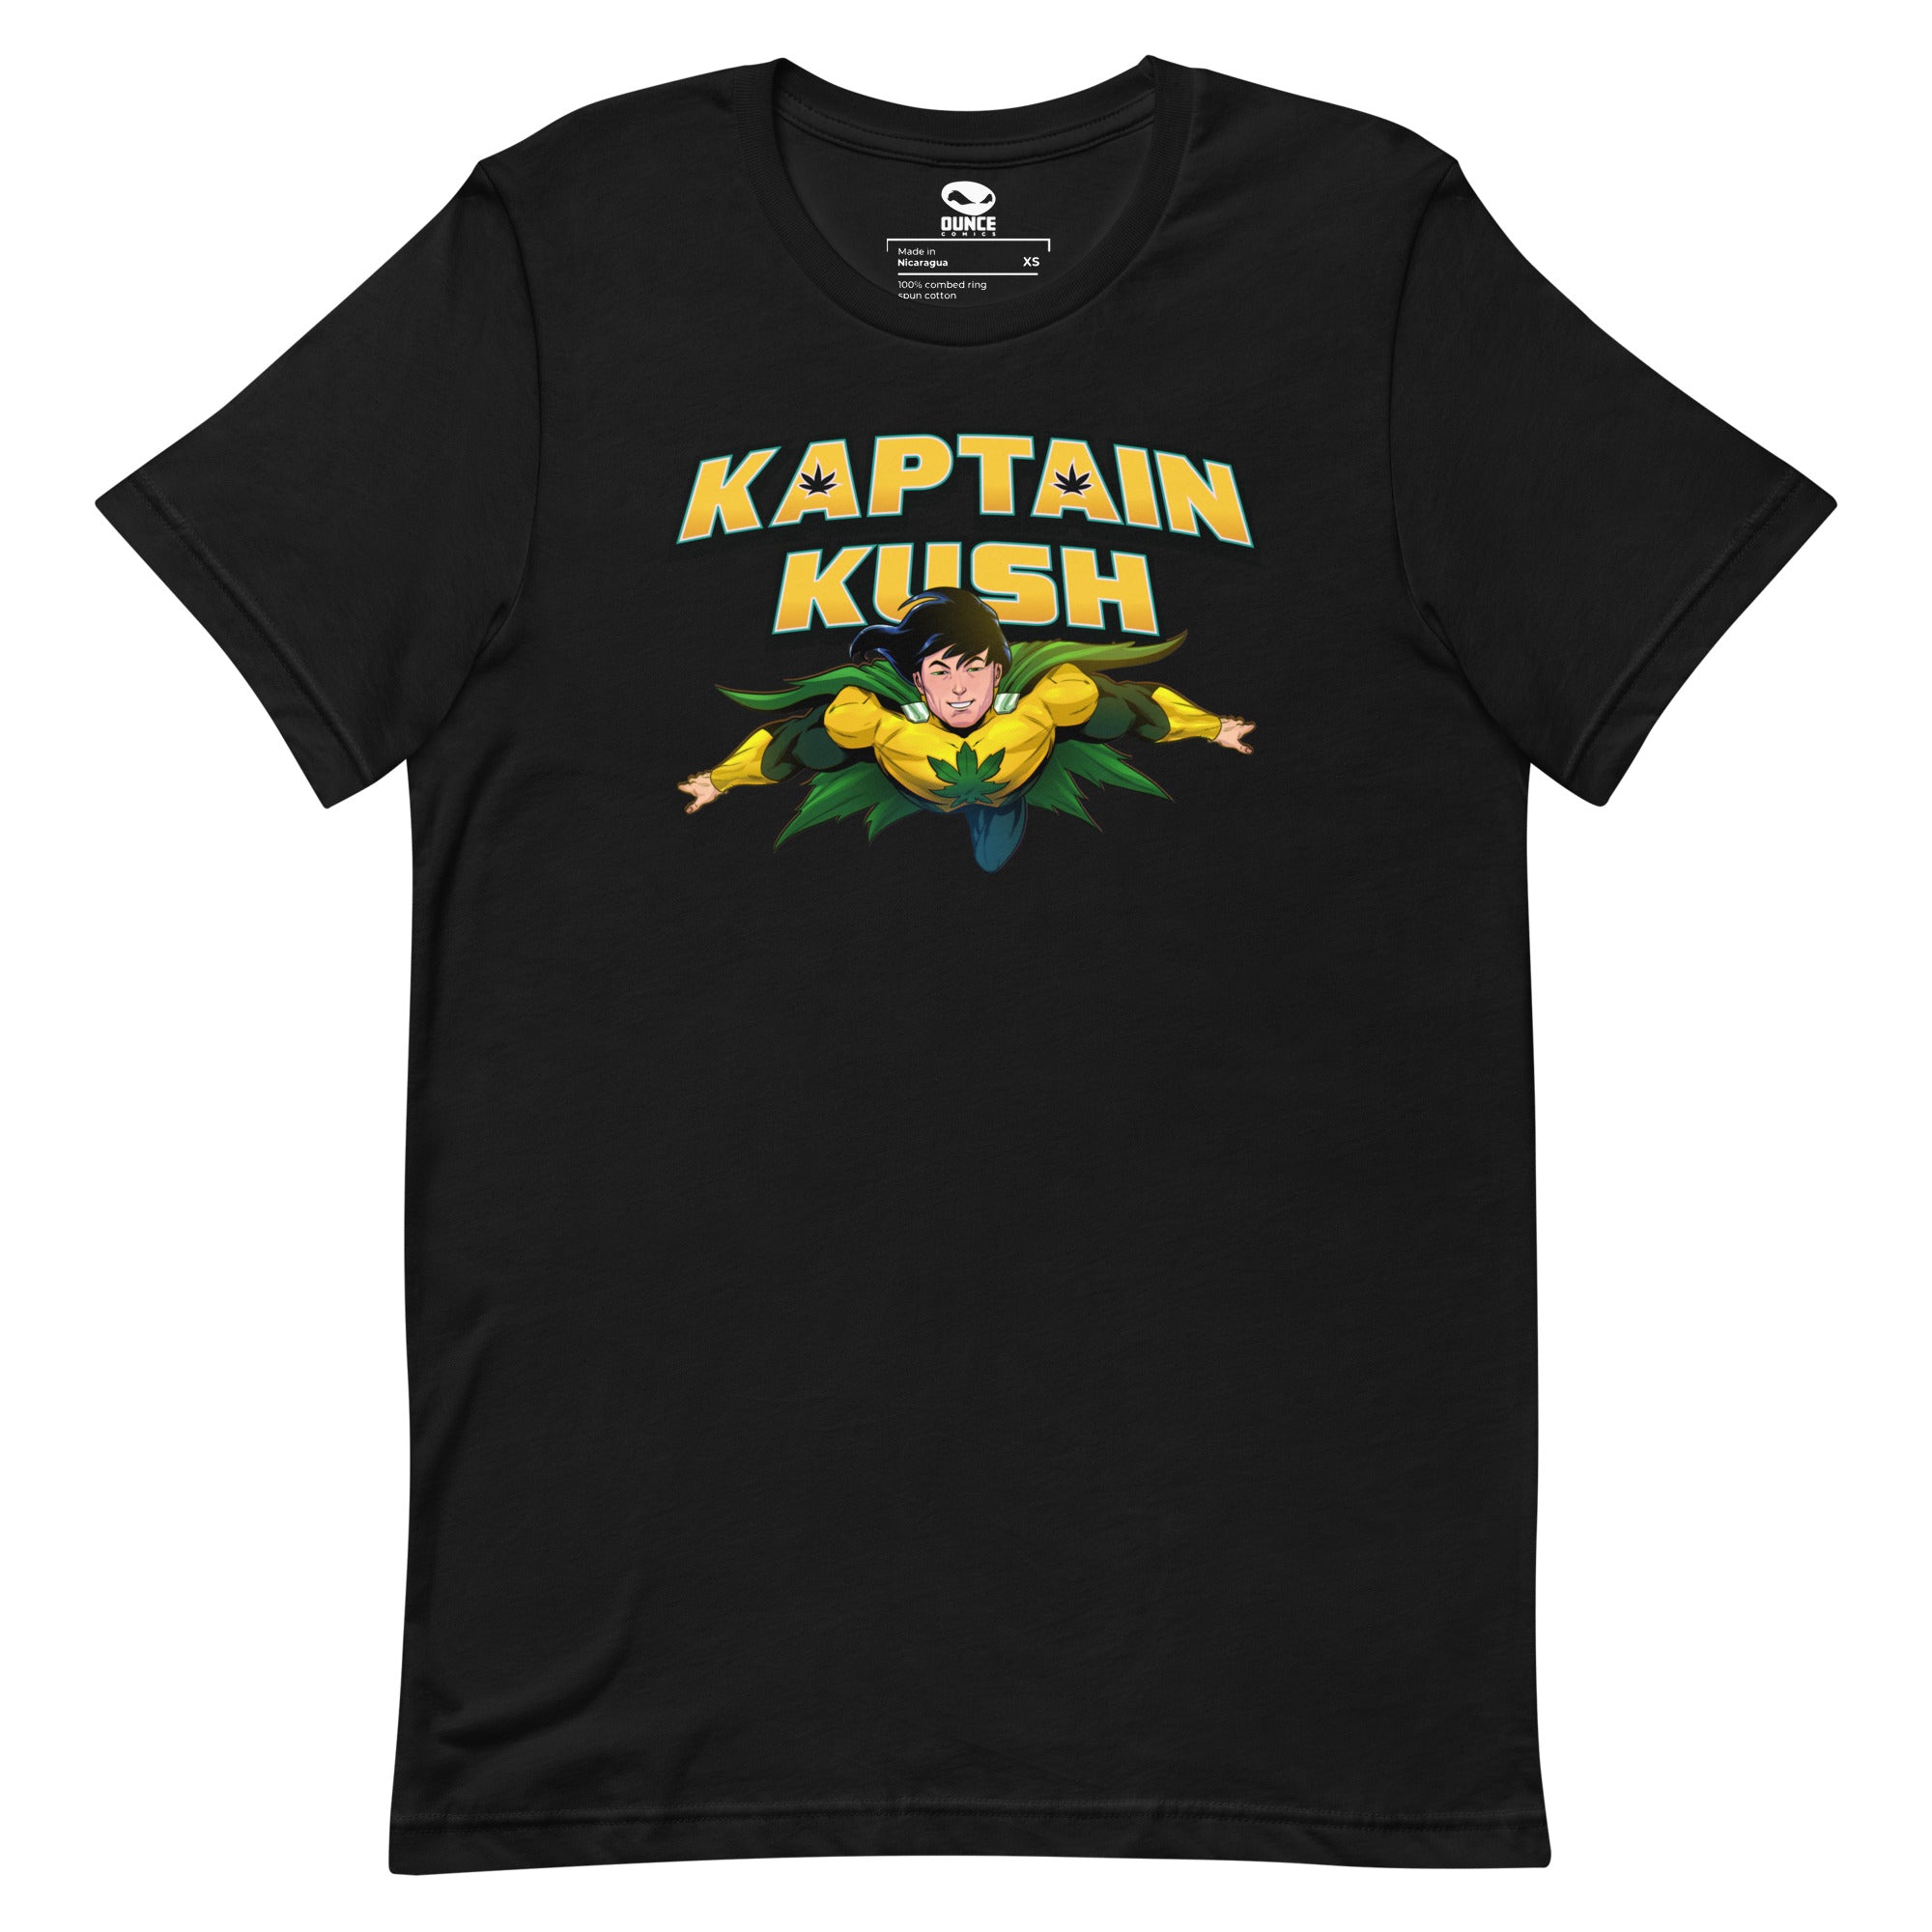 Kaptain Kush Graphic T-Shirt